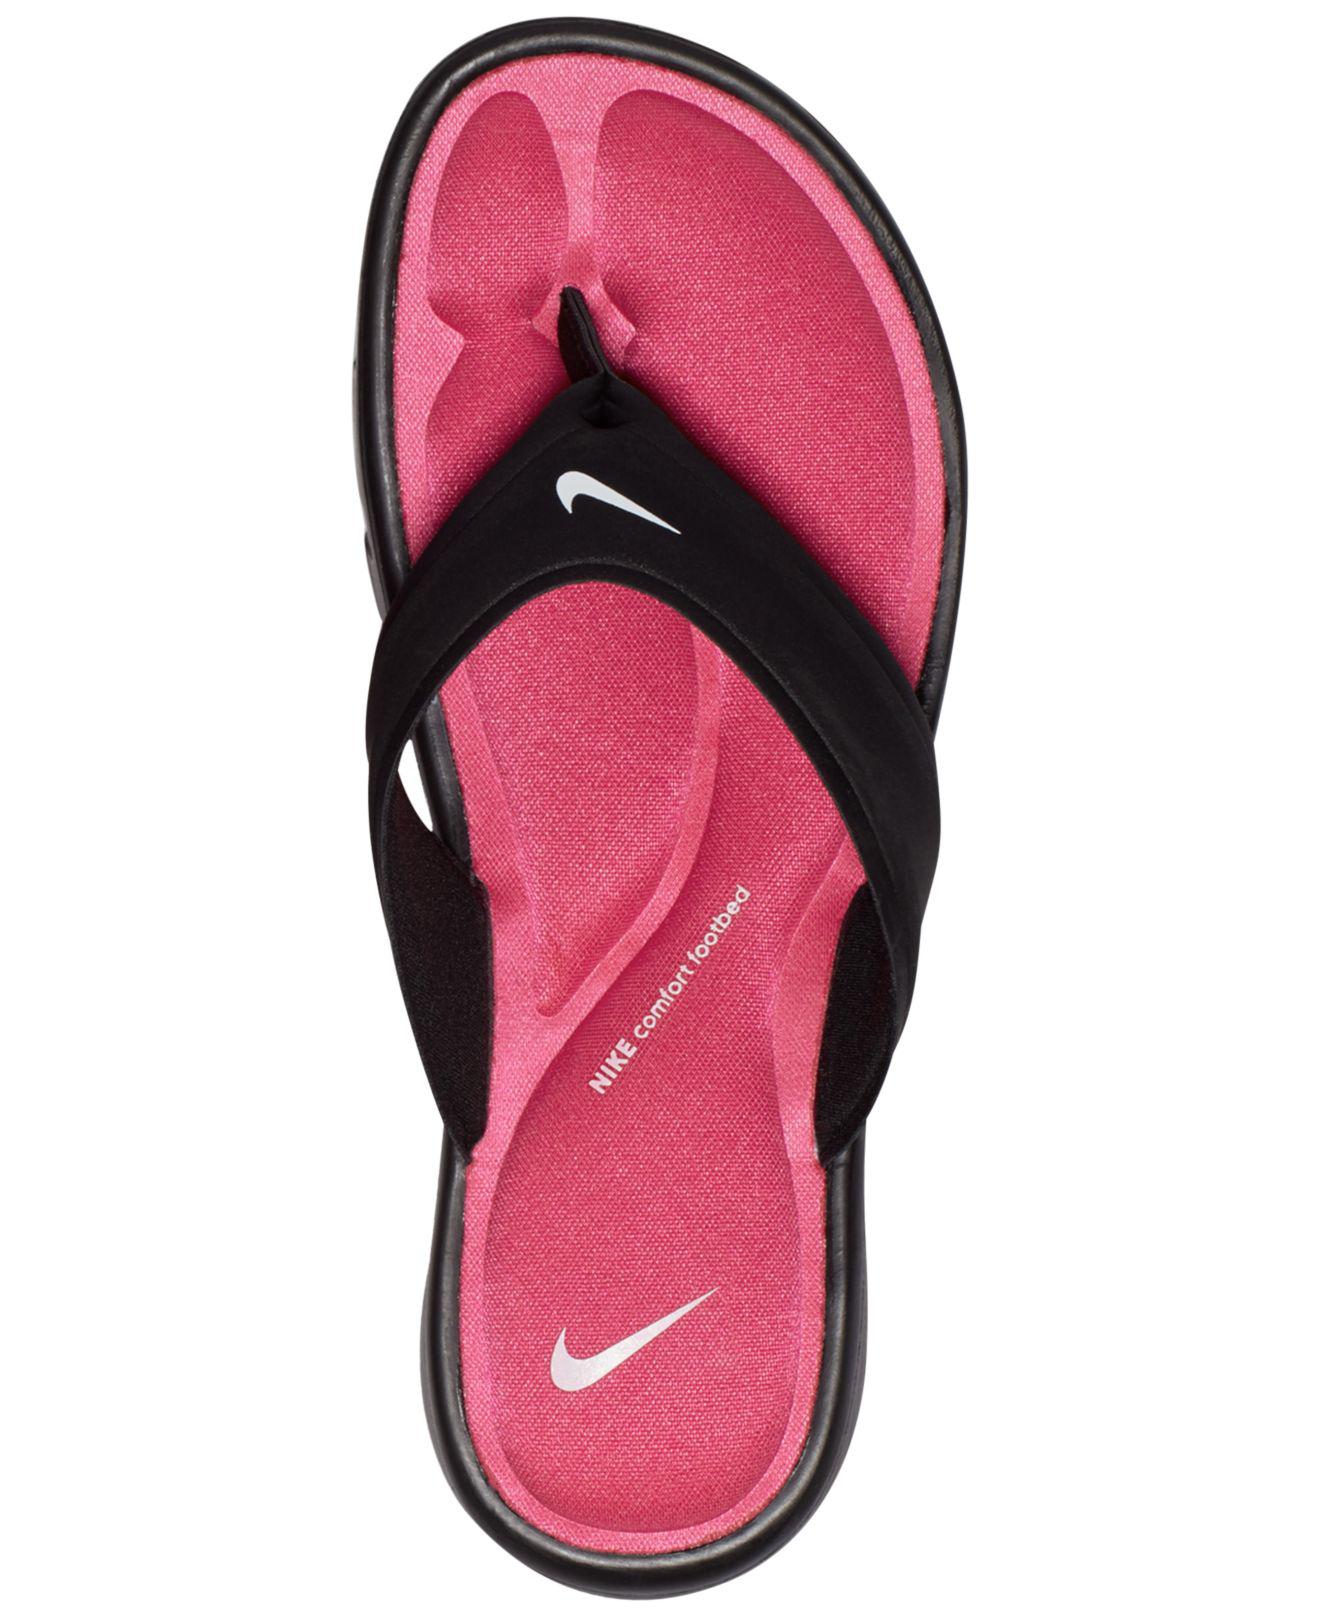 Nike Women's Ultra Comfort Flip Flop Sandals From Finish Line in Black Lyst